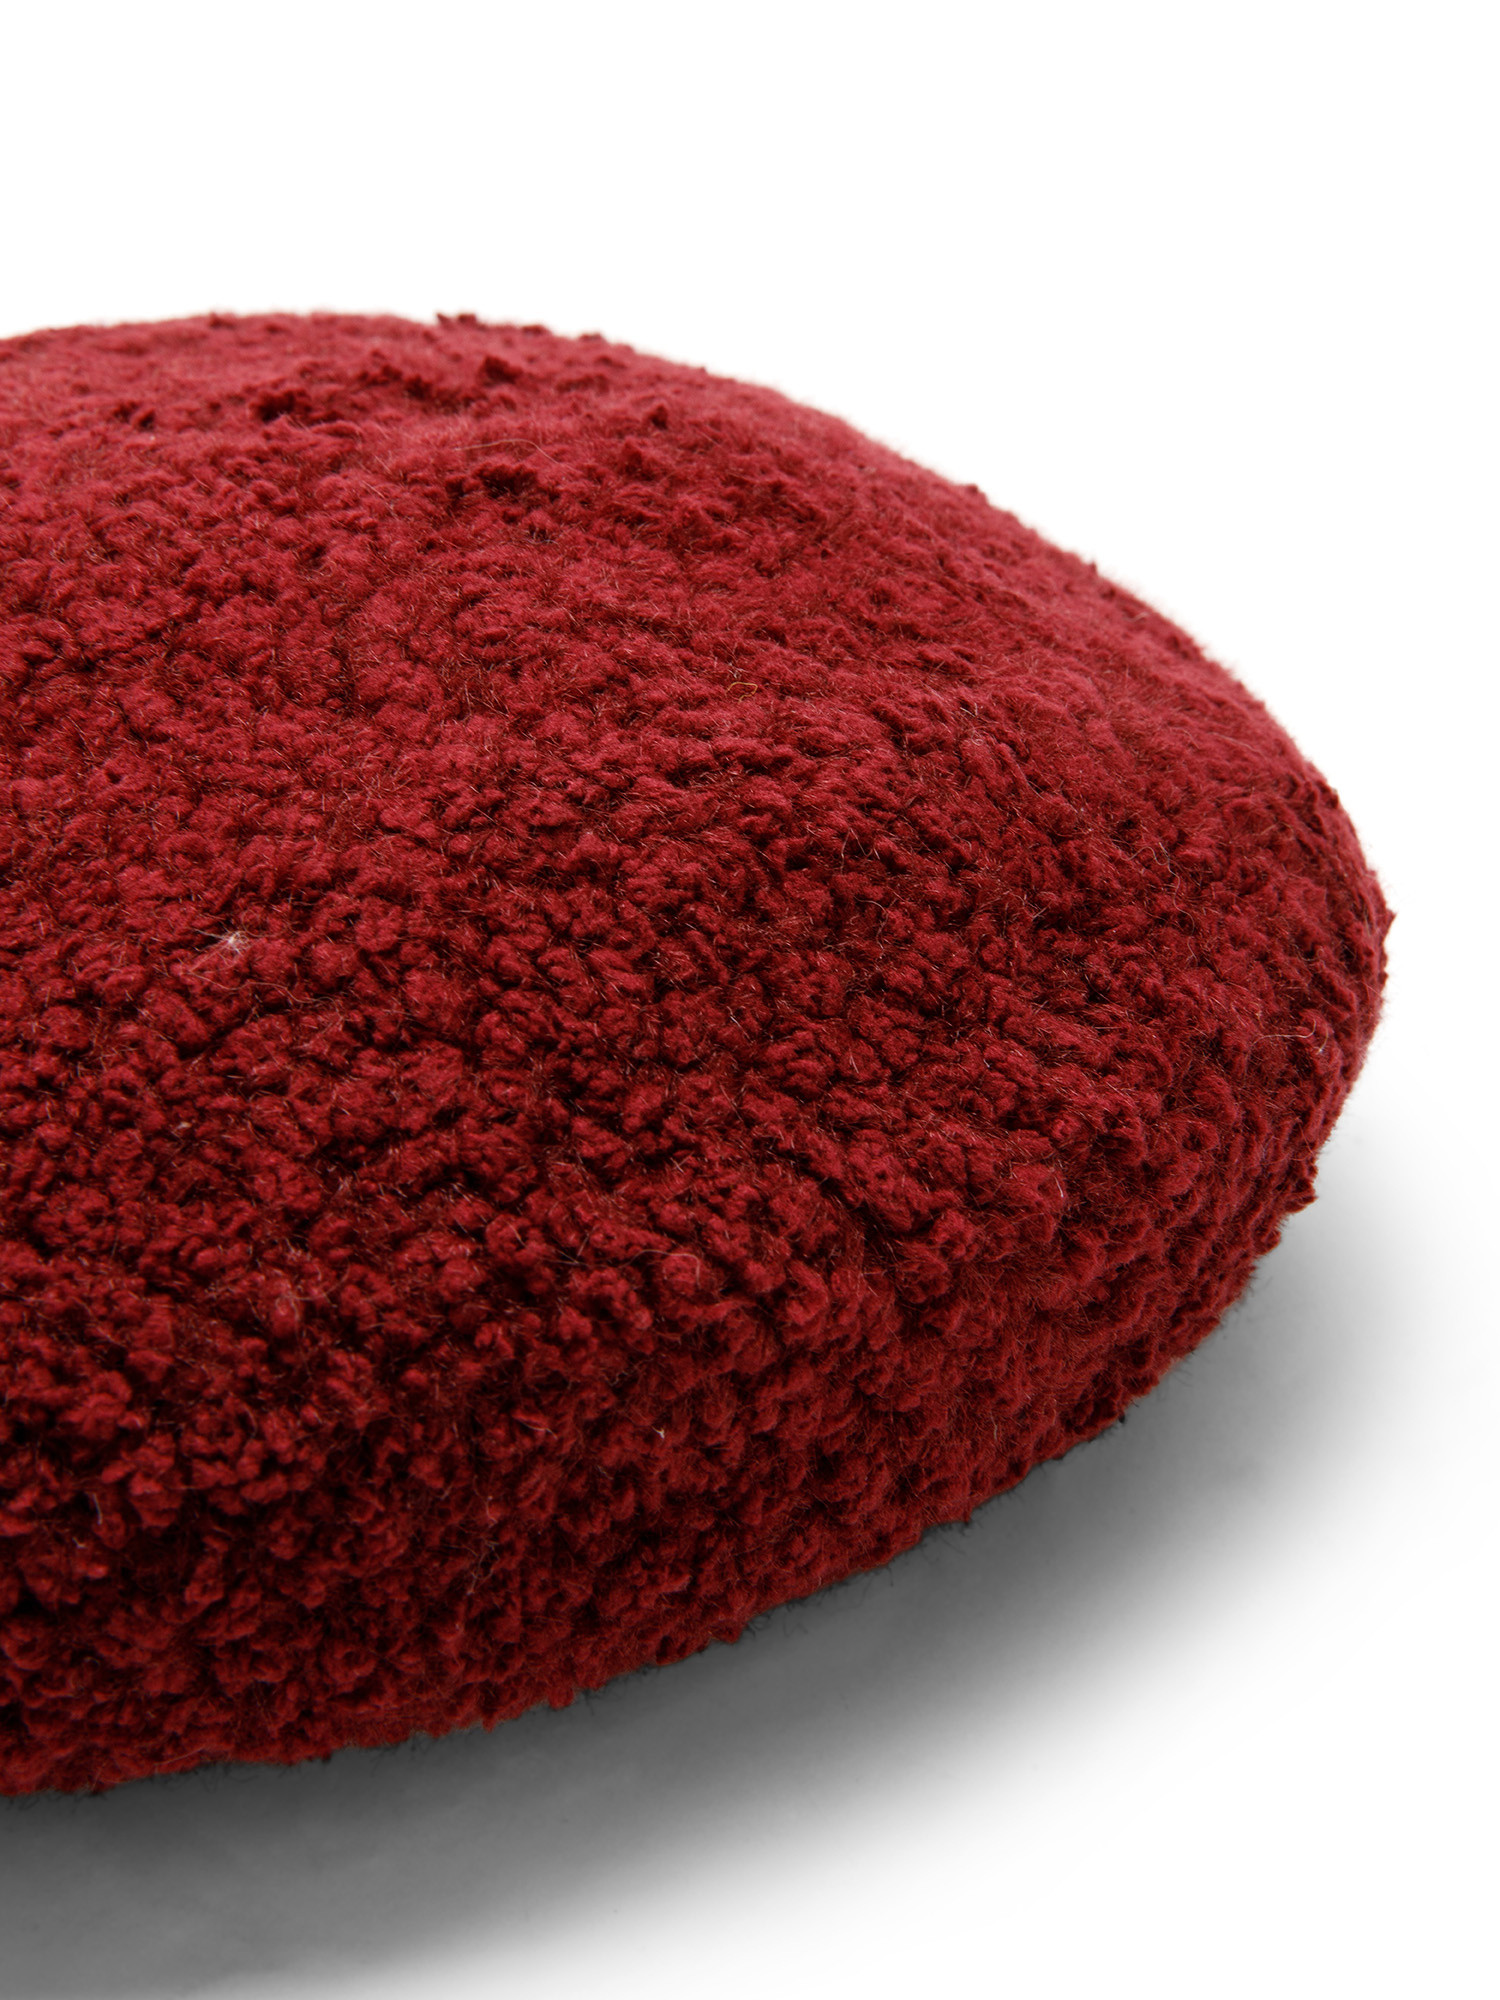 Koan - Basco effetto pelliccia, Rosso scuro, large image number 1